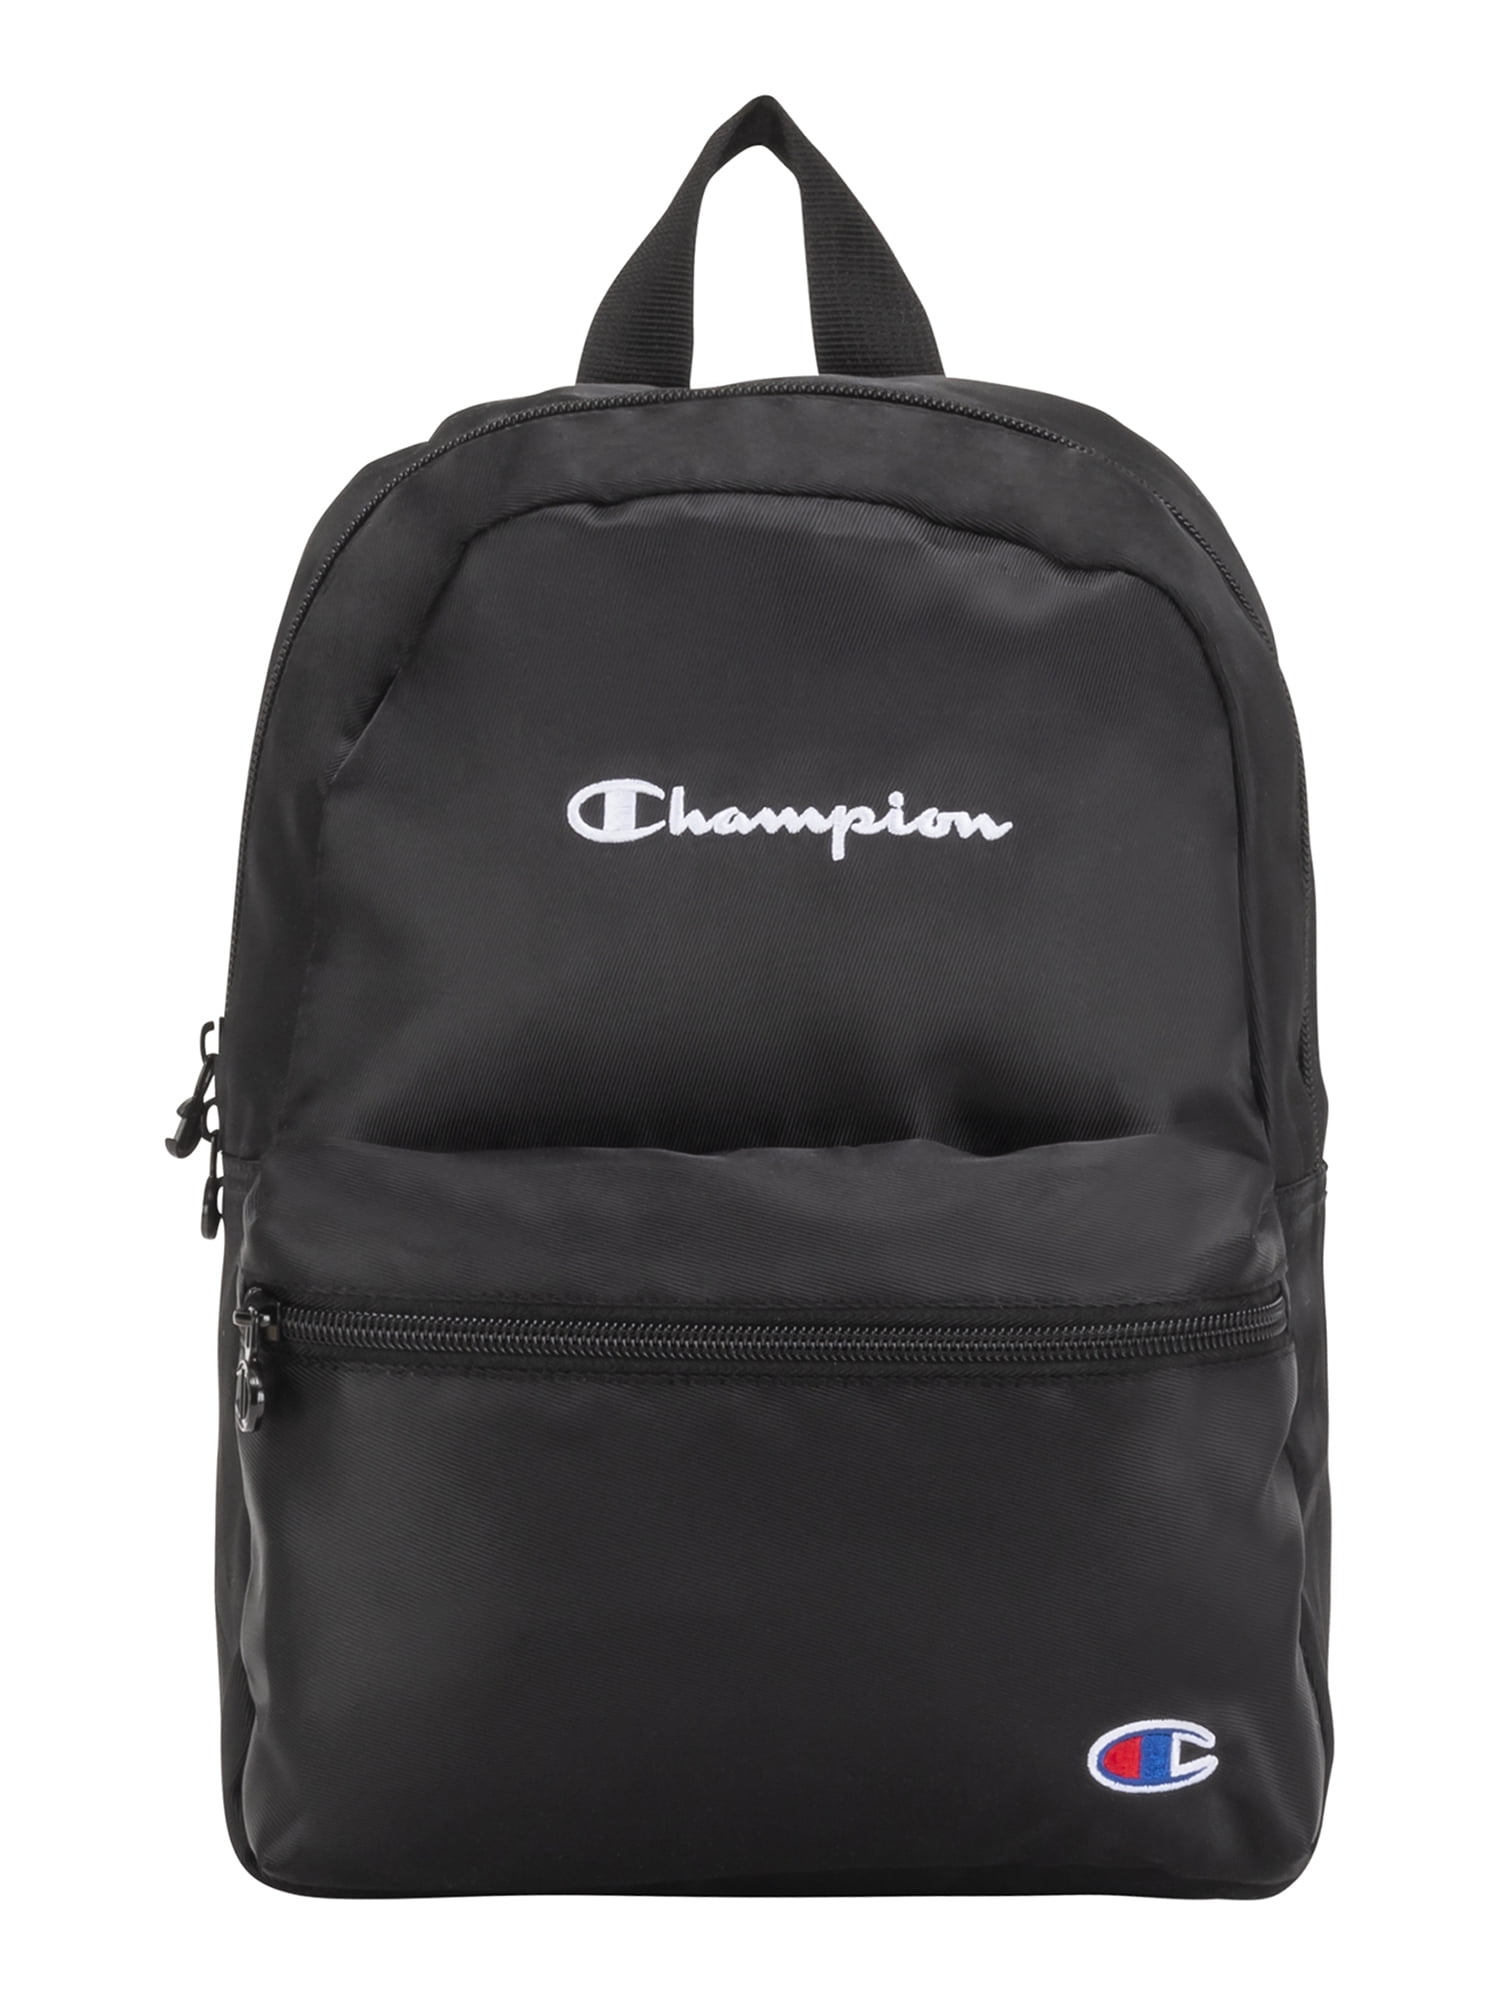 Champion Top Load Black Fashion Trandy Unisex Laptop Sleeve Backpack DARK GREY 